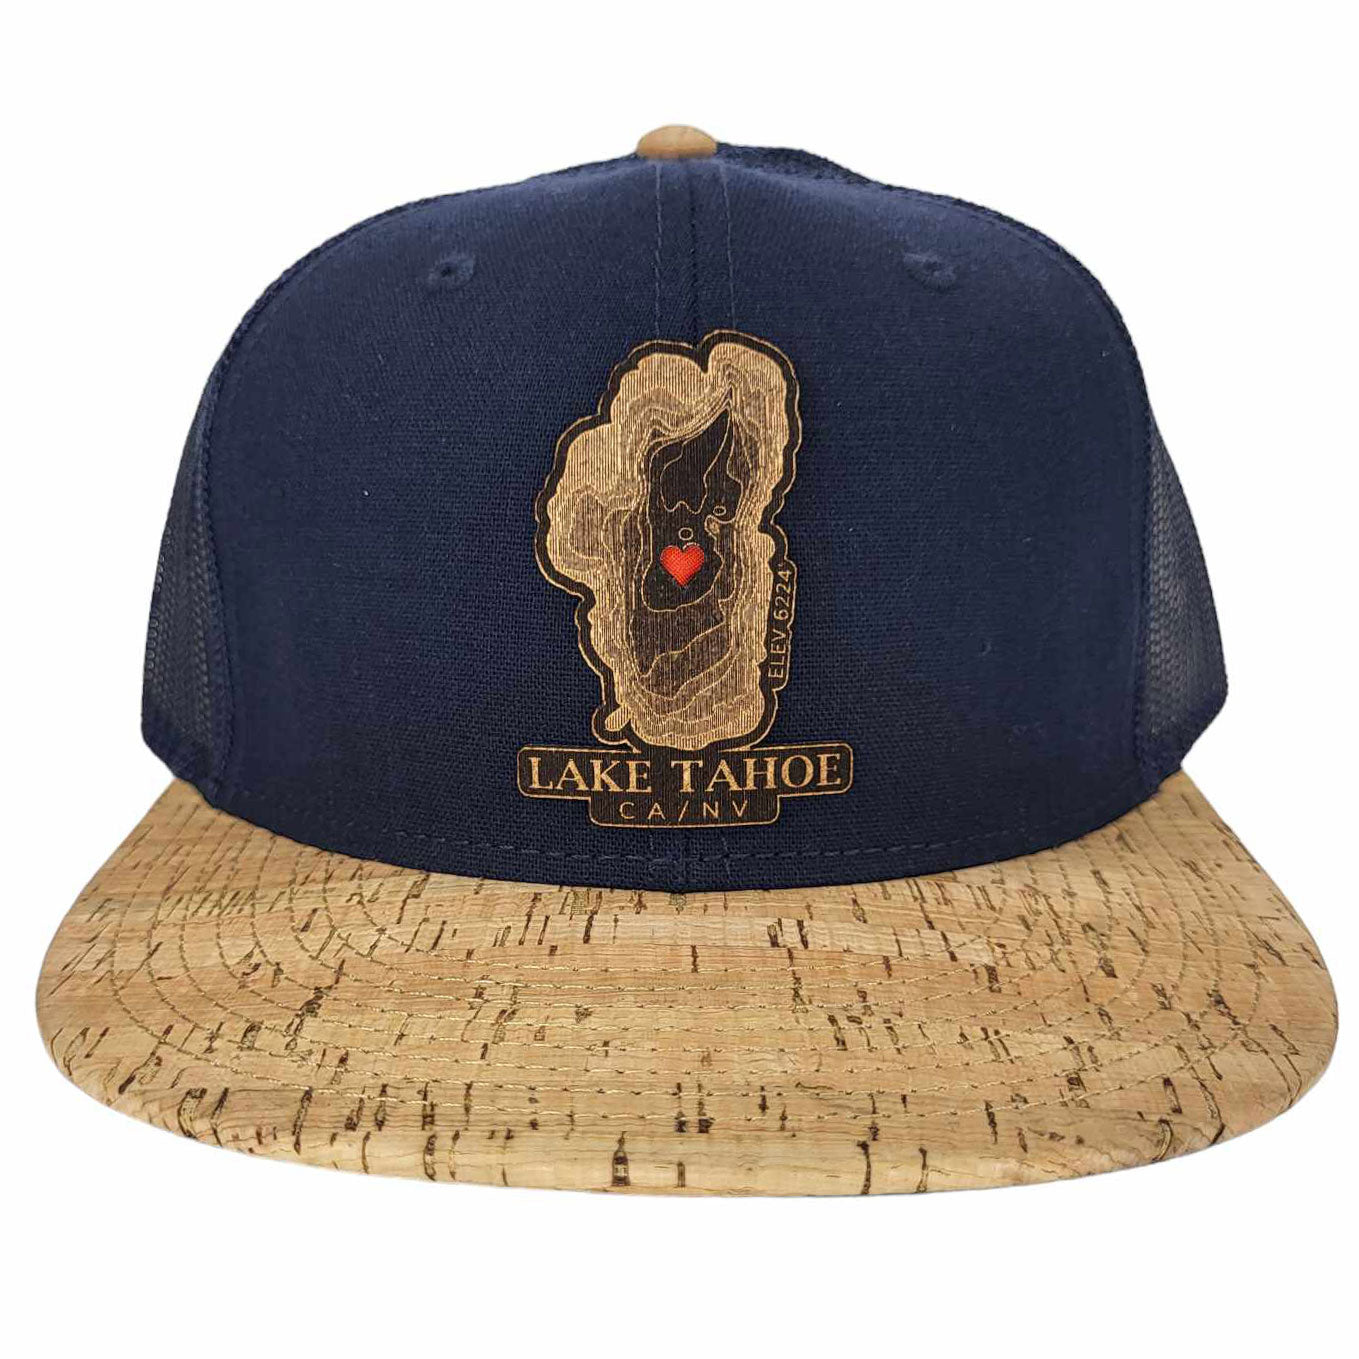 The Lake Tahoe Cork Hat